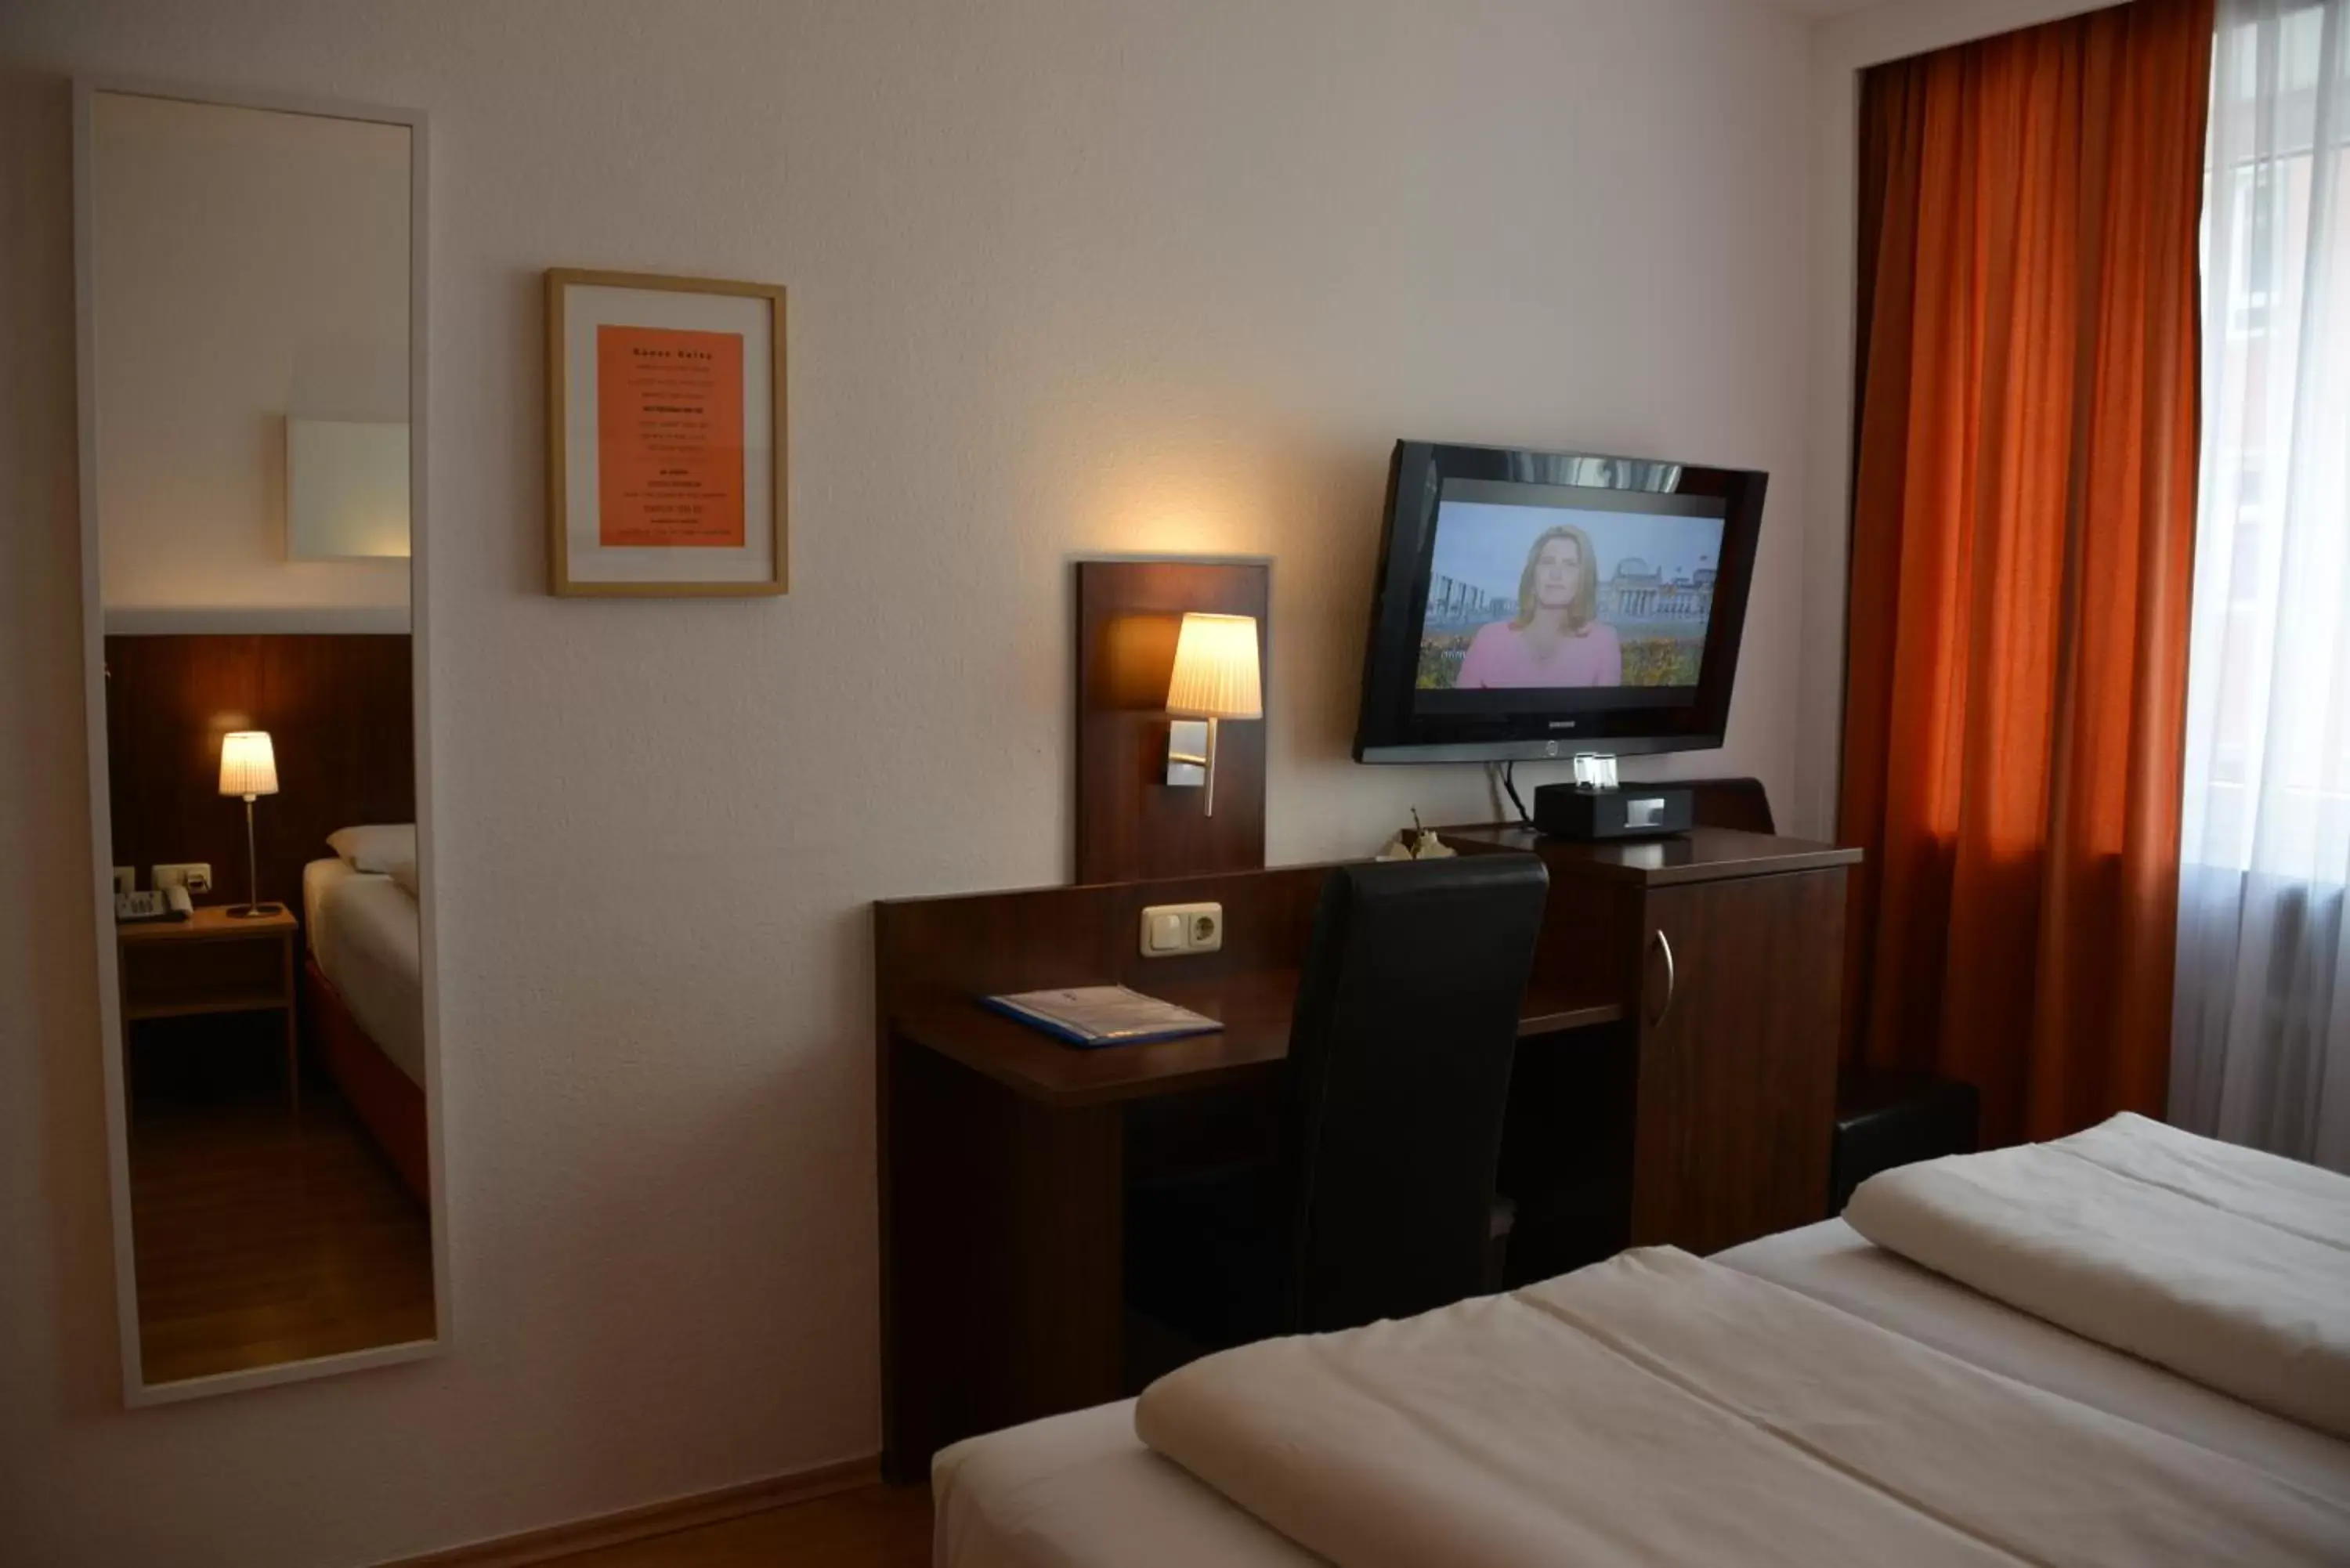 Area and facilities, TV/Entertainment Center in Hotel Italia